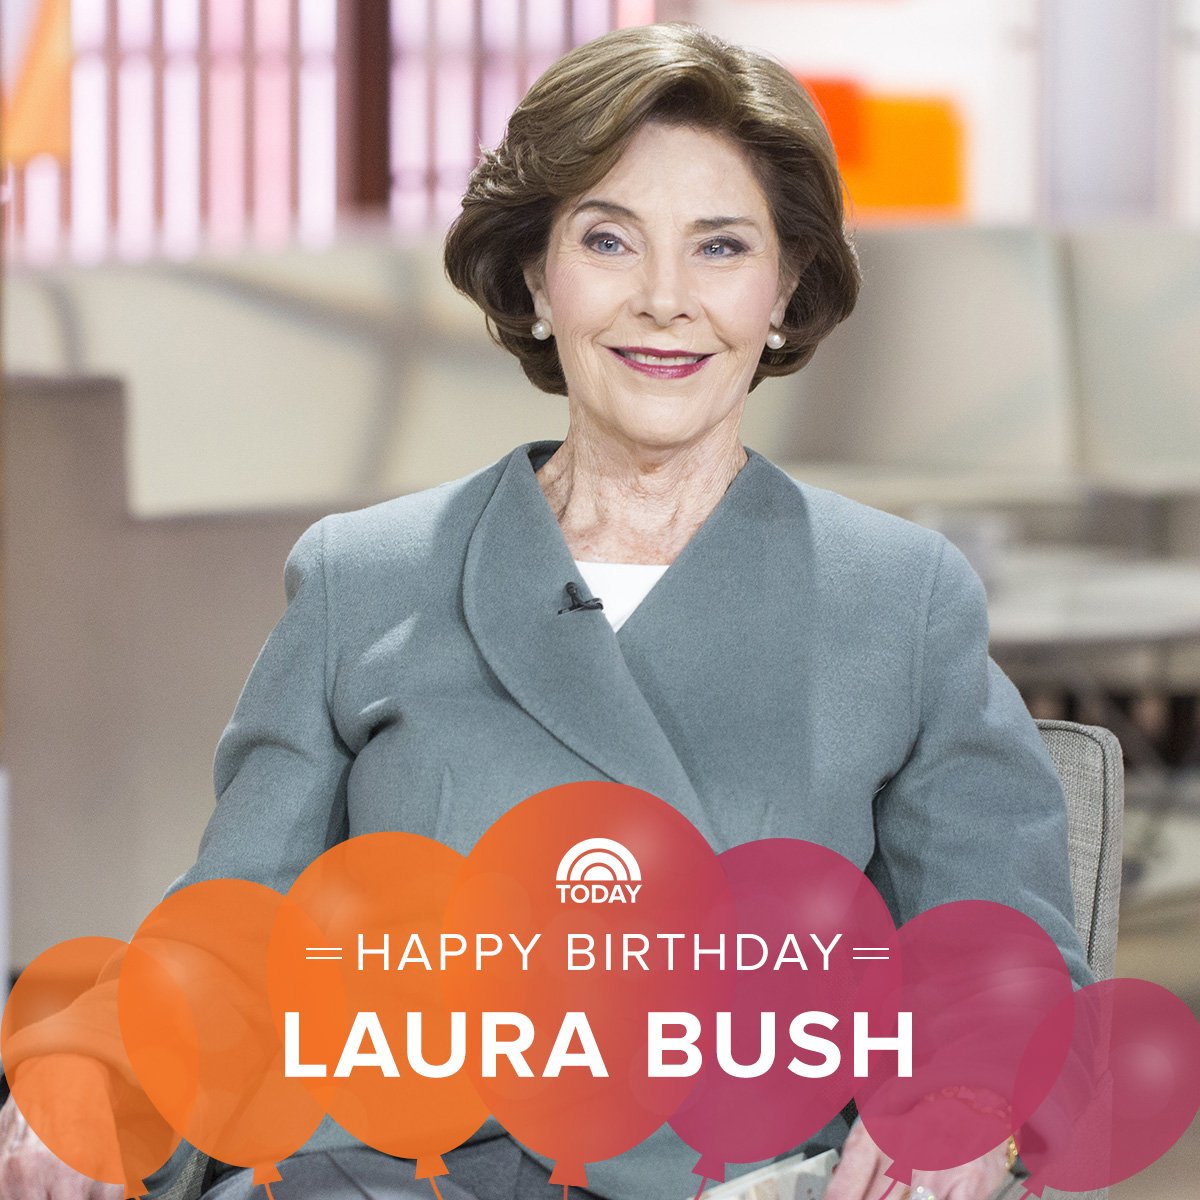 Happy birthday, Laura Bush!  